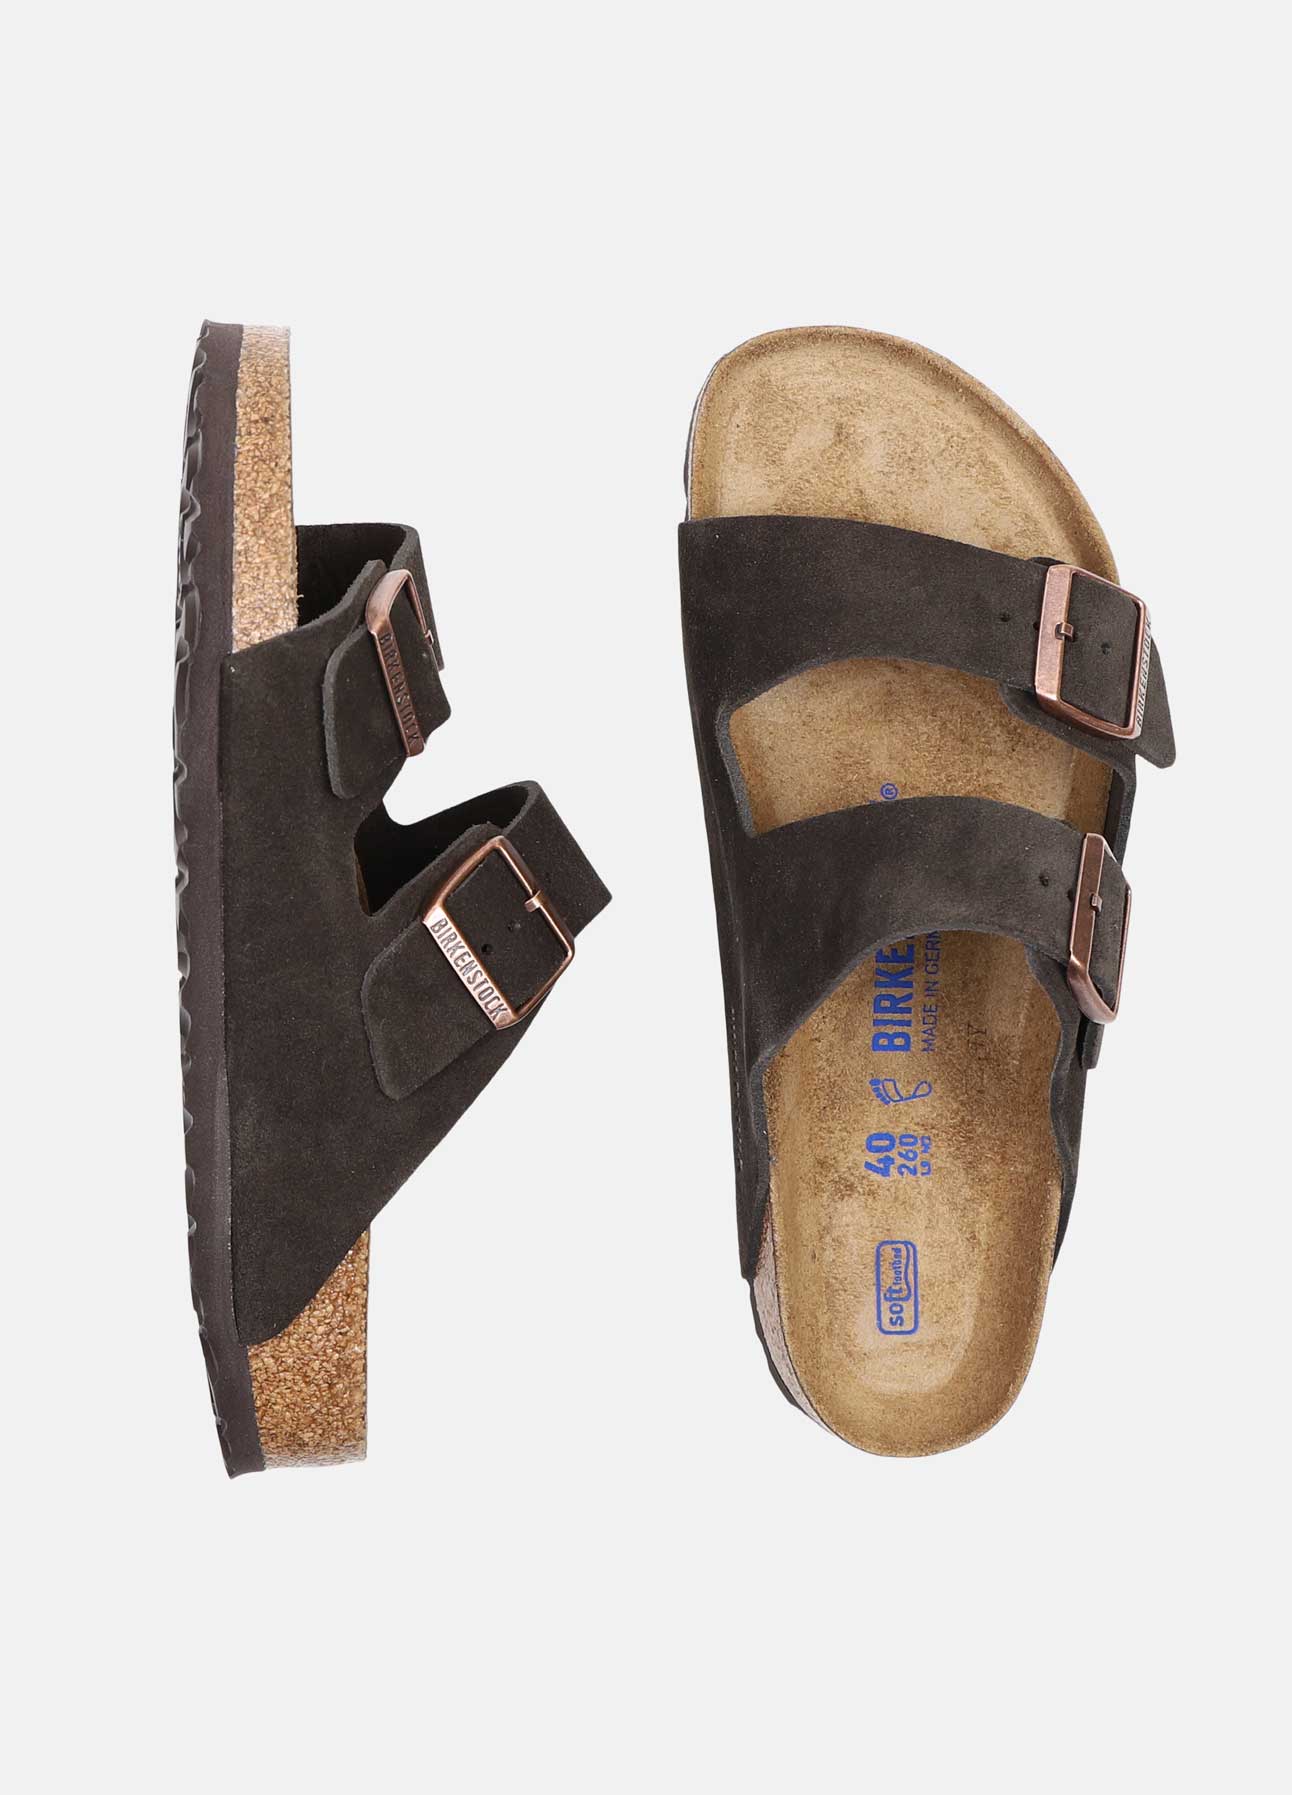 Kunstig Lavet en kontrakt Bortset Arizona sandaler fra Birkenstock | Shop online hos troelstrup.com